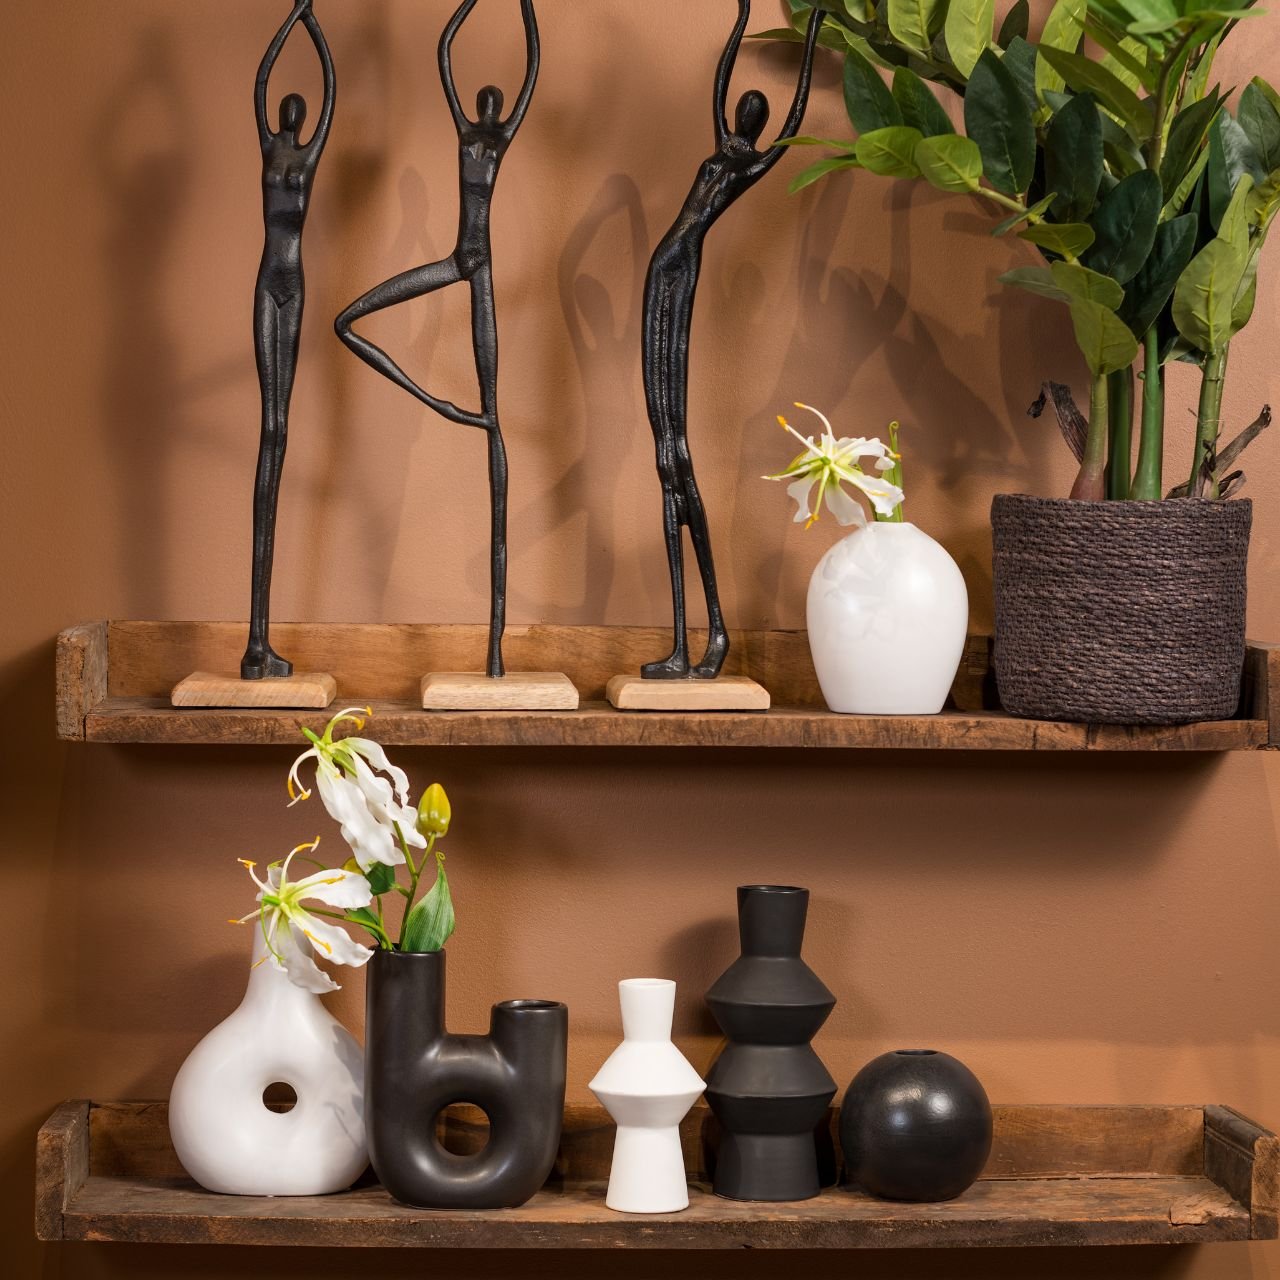 Vaso in ceramica nero, bianco a 2 pieghe, (L/H/D) 15x20x5cm